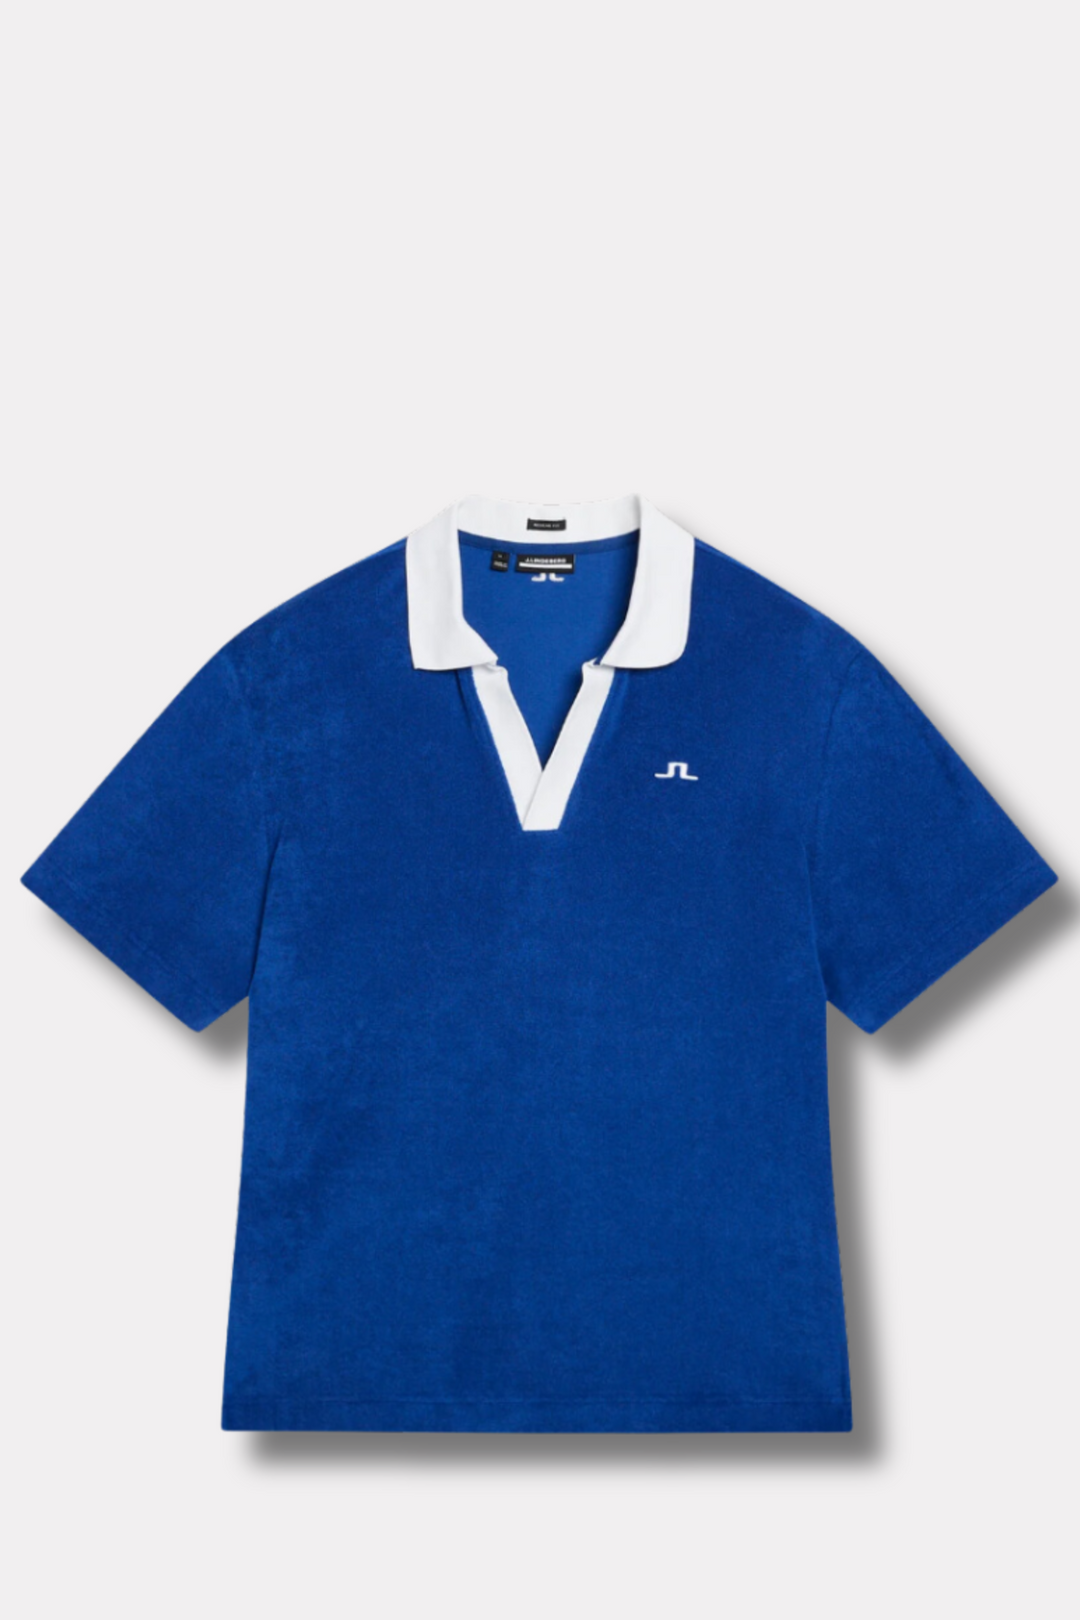 Gavin Terry Shirt Sodalite Blue